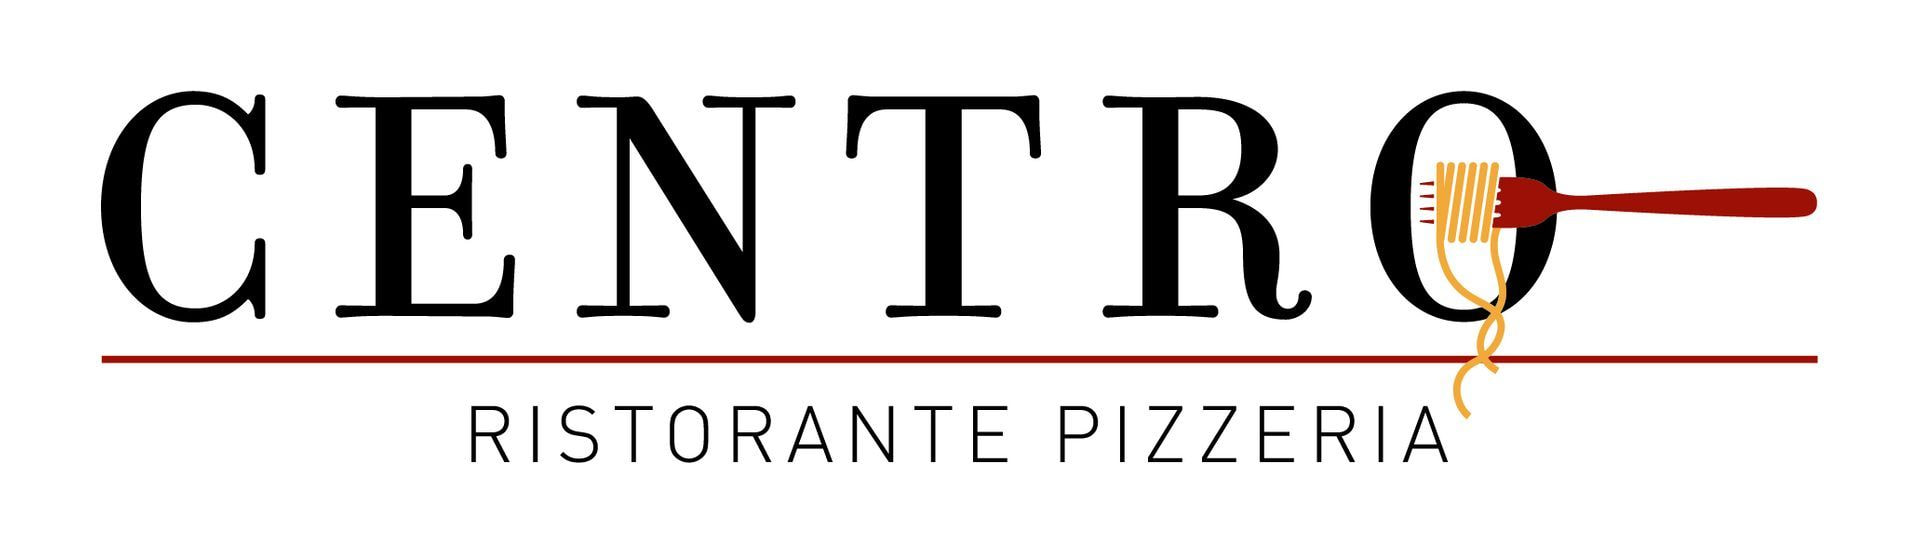 ristorante-centro-logo.jpg